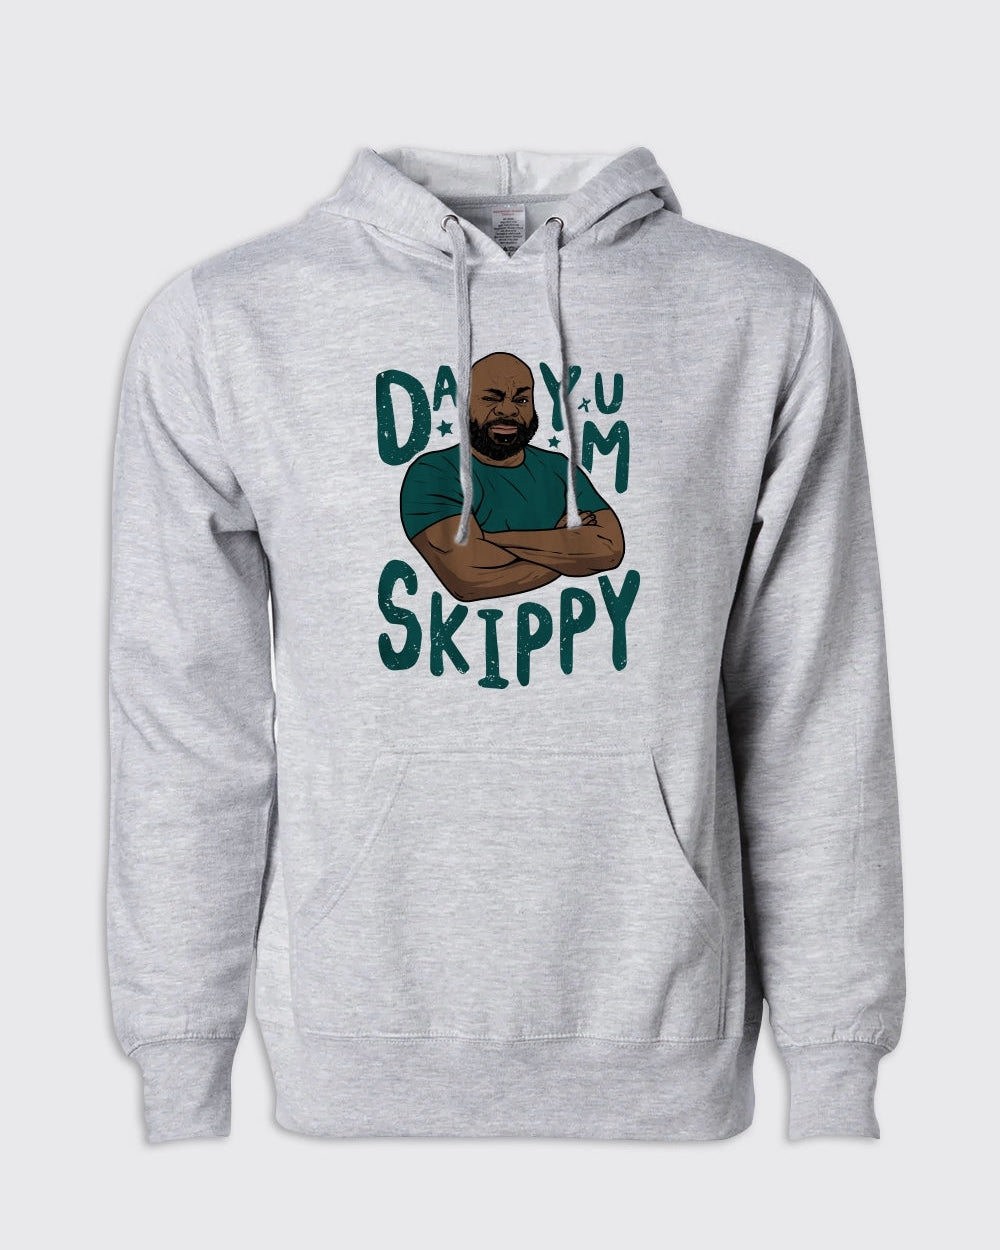 Hollis Thomas Dayum Skippy Hoodie - Philly Sports Shirts